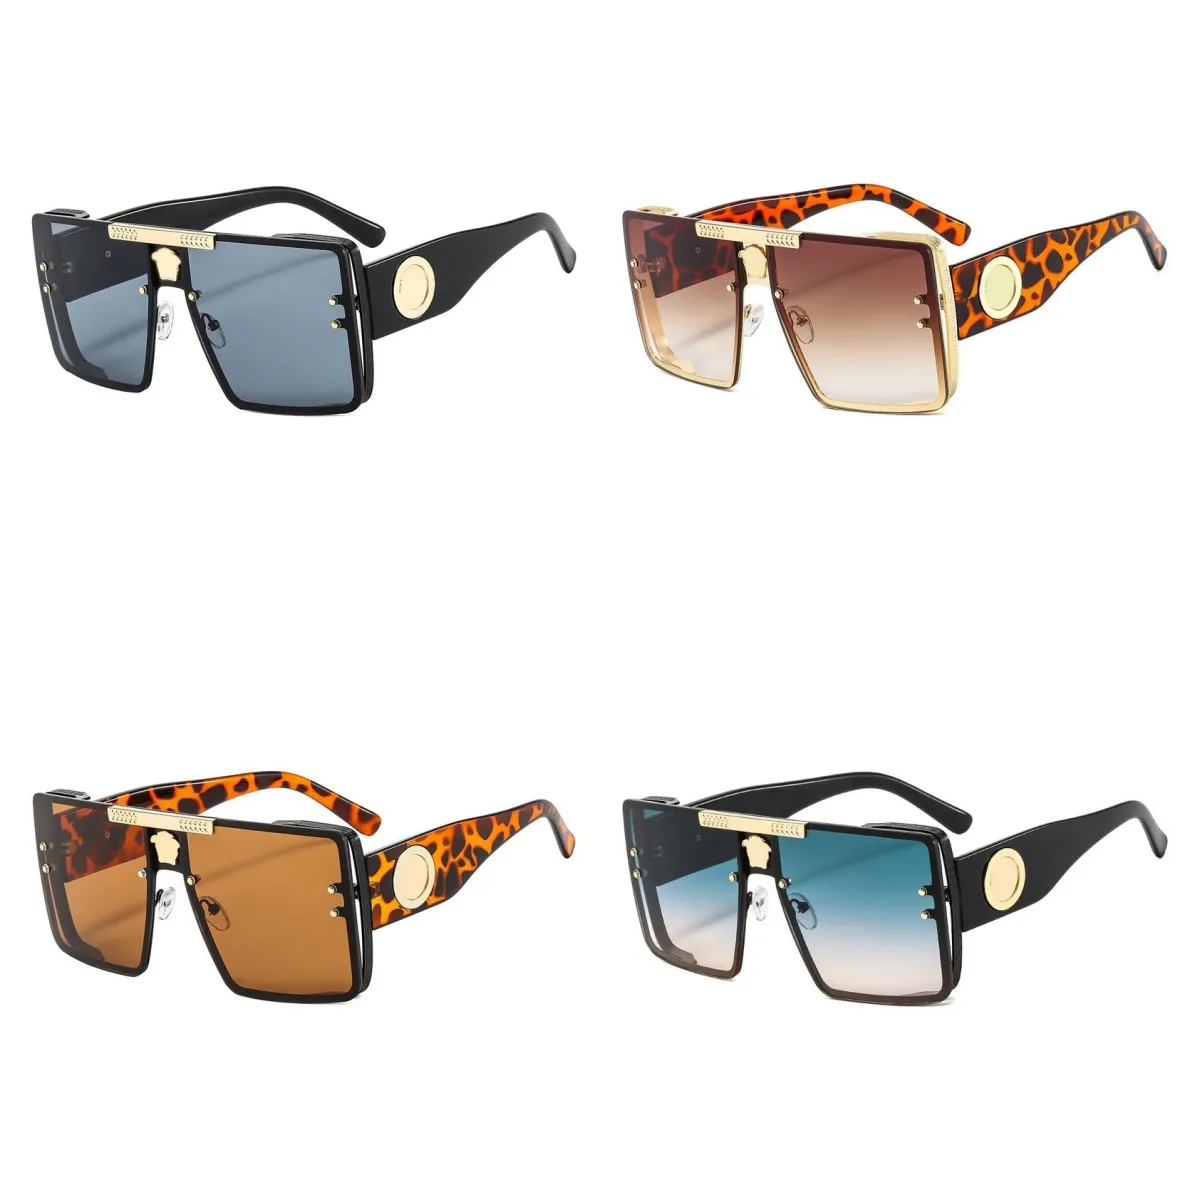 Designer fashion sunglasses men outdoor shades sun glasses for women driving modern vintage sunglasses polarized occhiali da sole classic hg107 H4